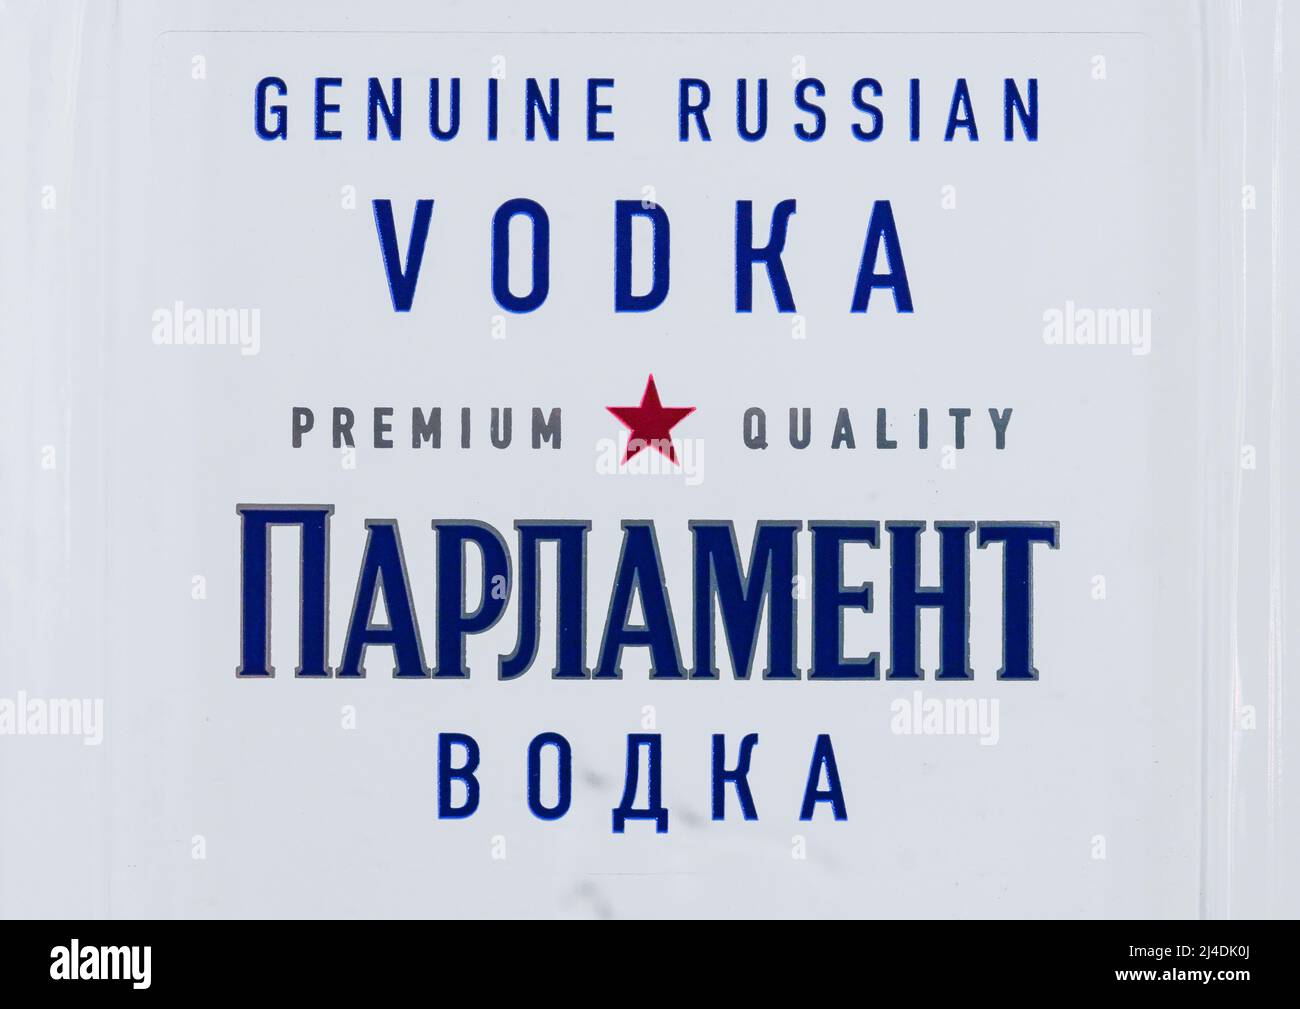 Parliament, Etikett, Flasche echt russischer Wodka Stock Photo